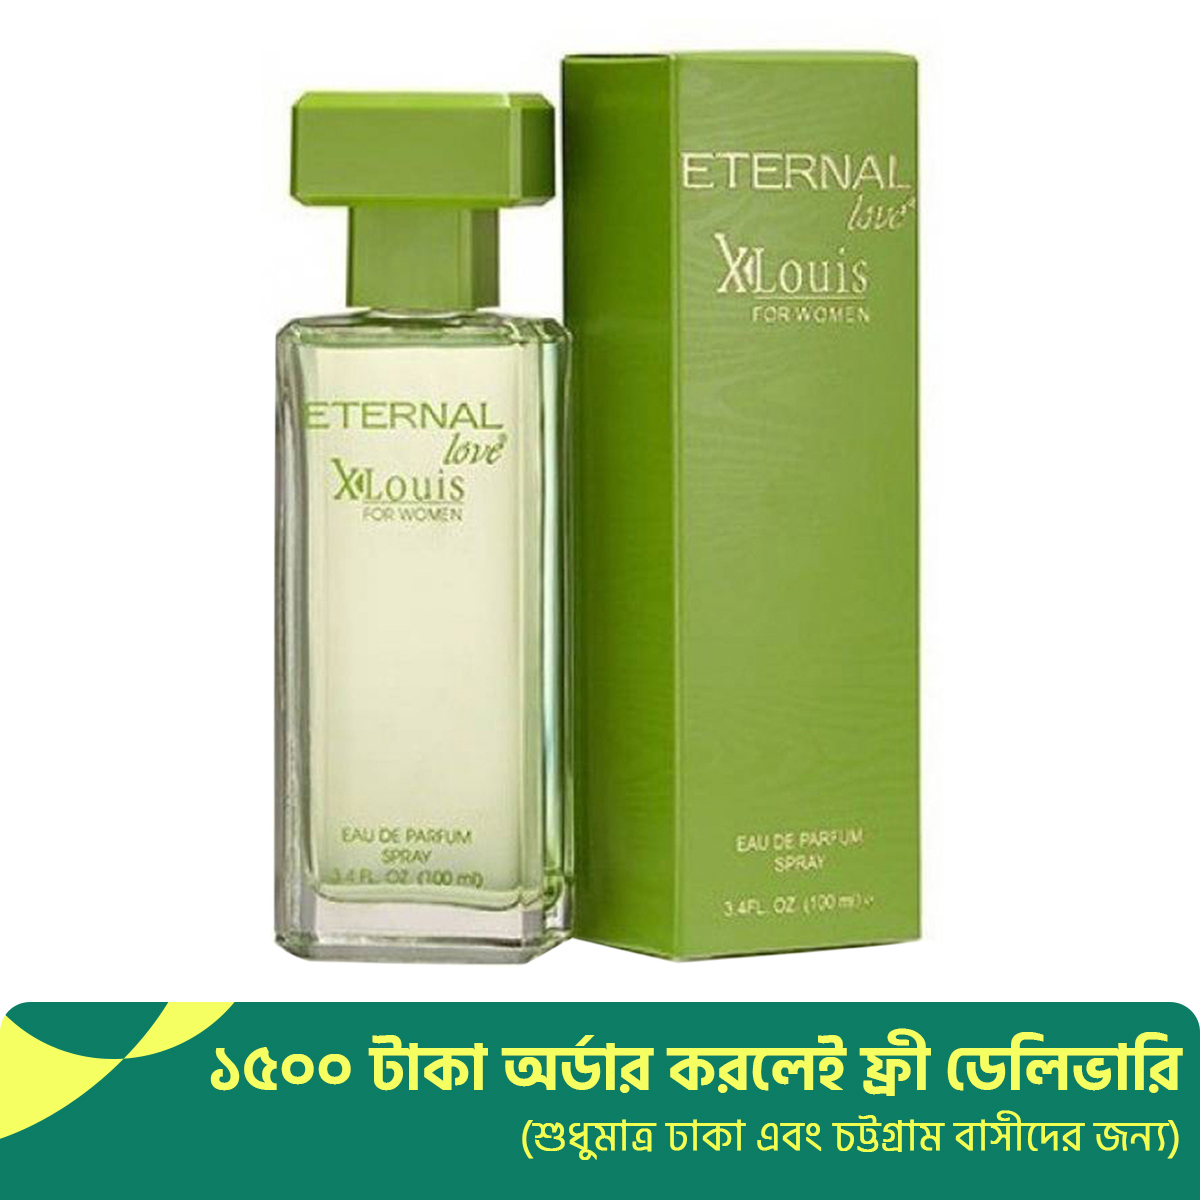 Eternal Love Perfume Online at the Best Price in Bangladesh